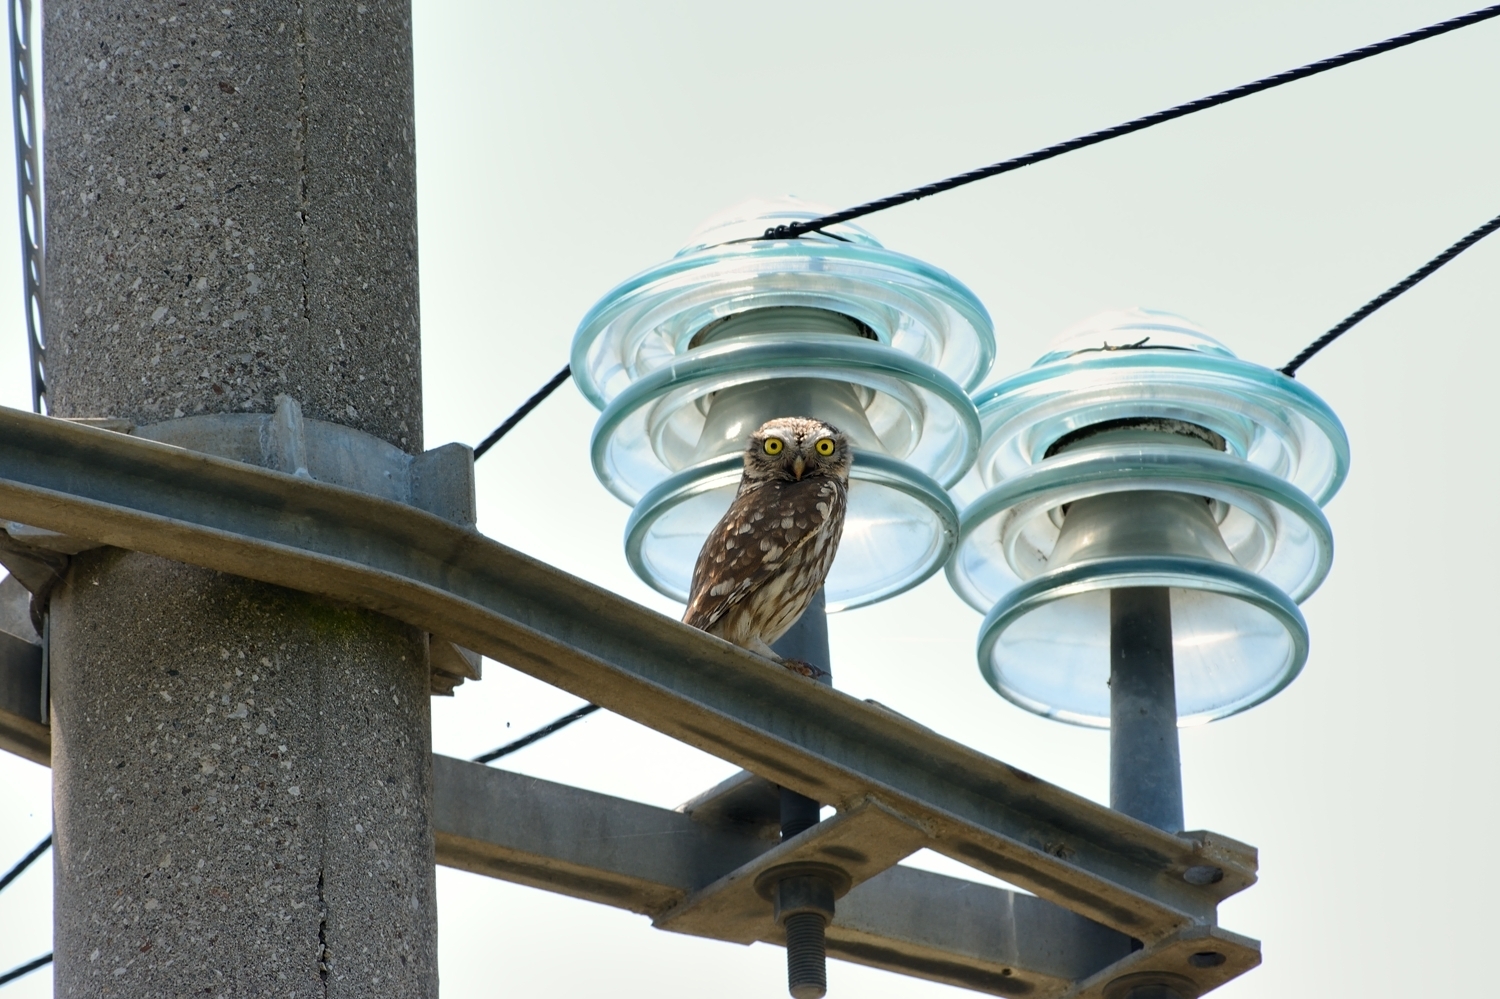 Owl on high voltage....